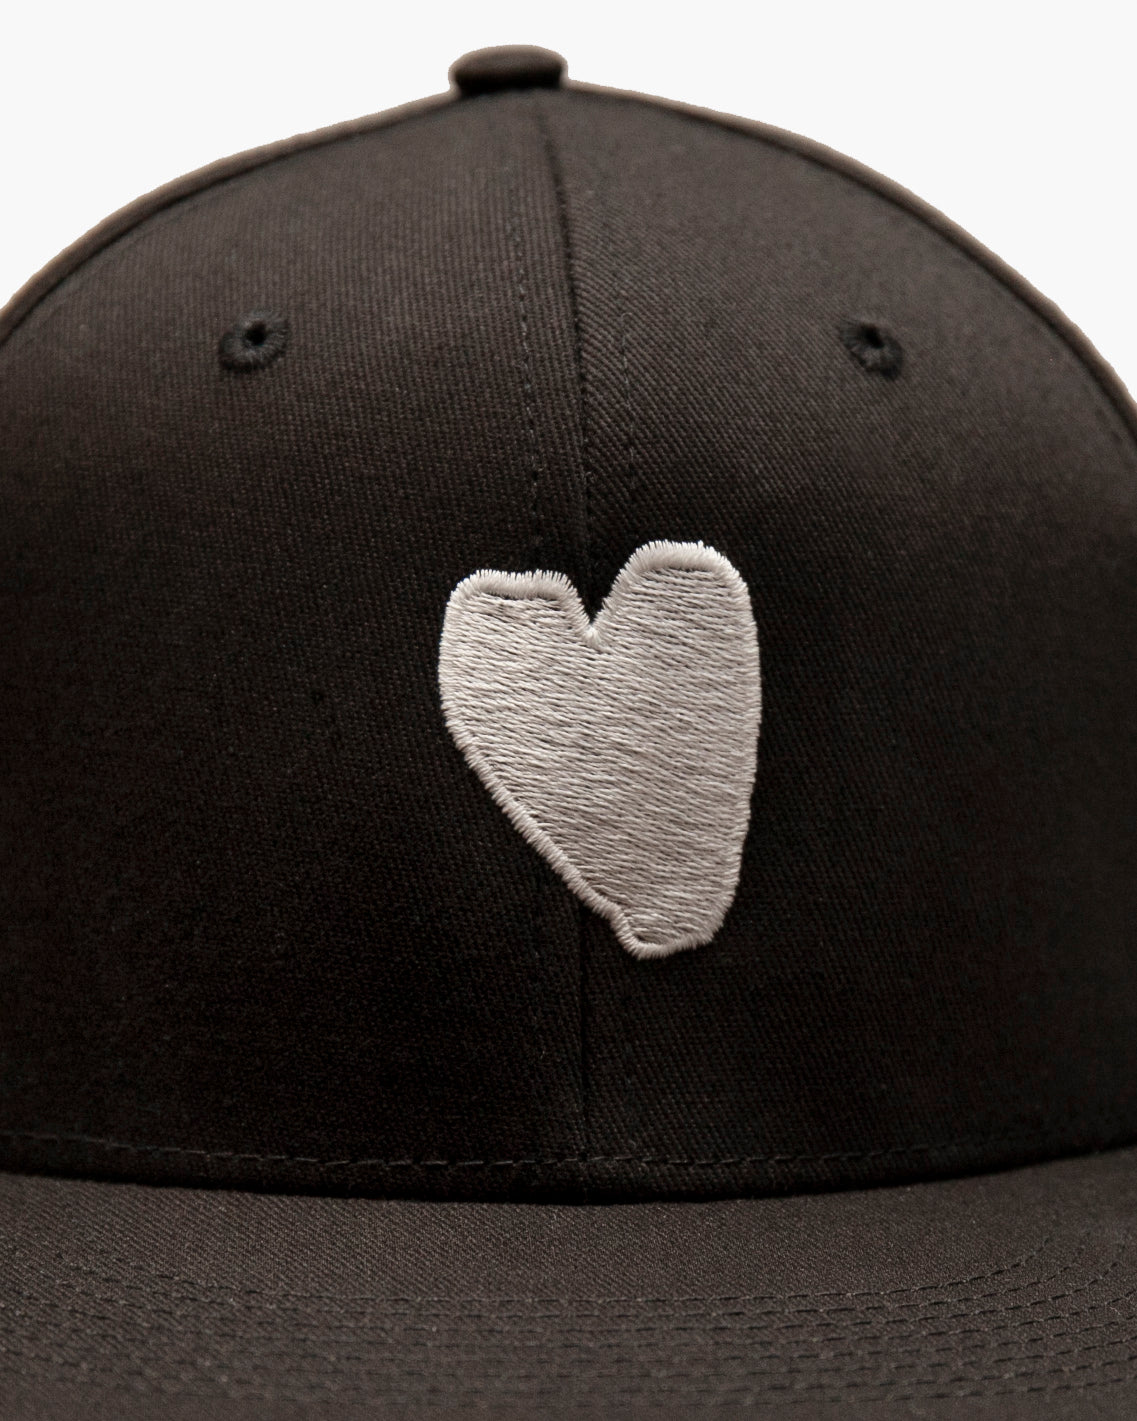 Flat Bill Snapback Cap | White Heart on Black